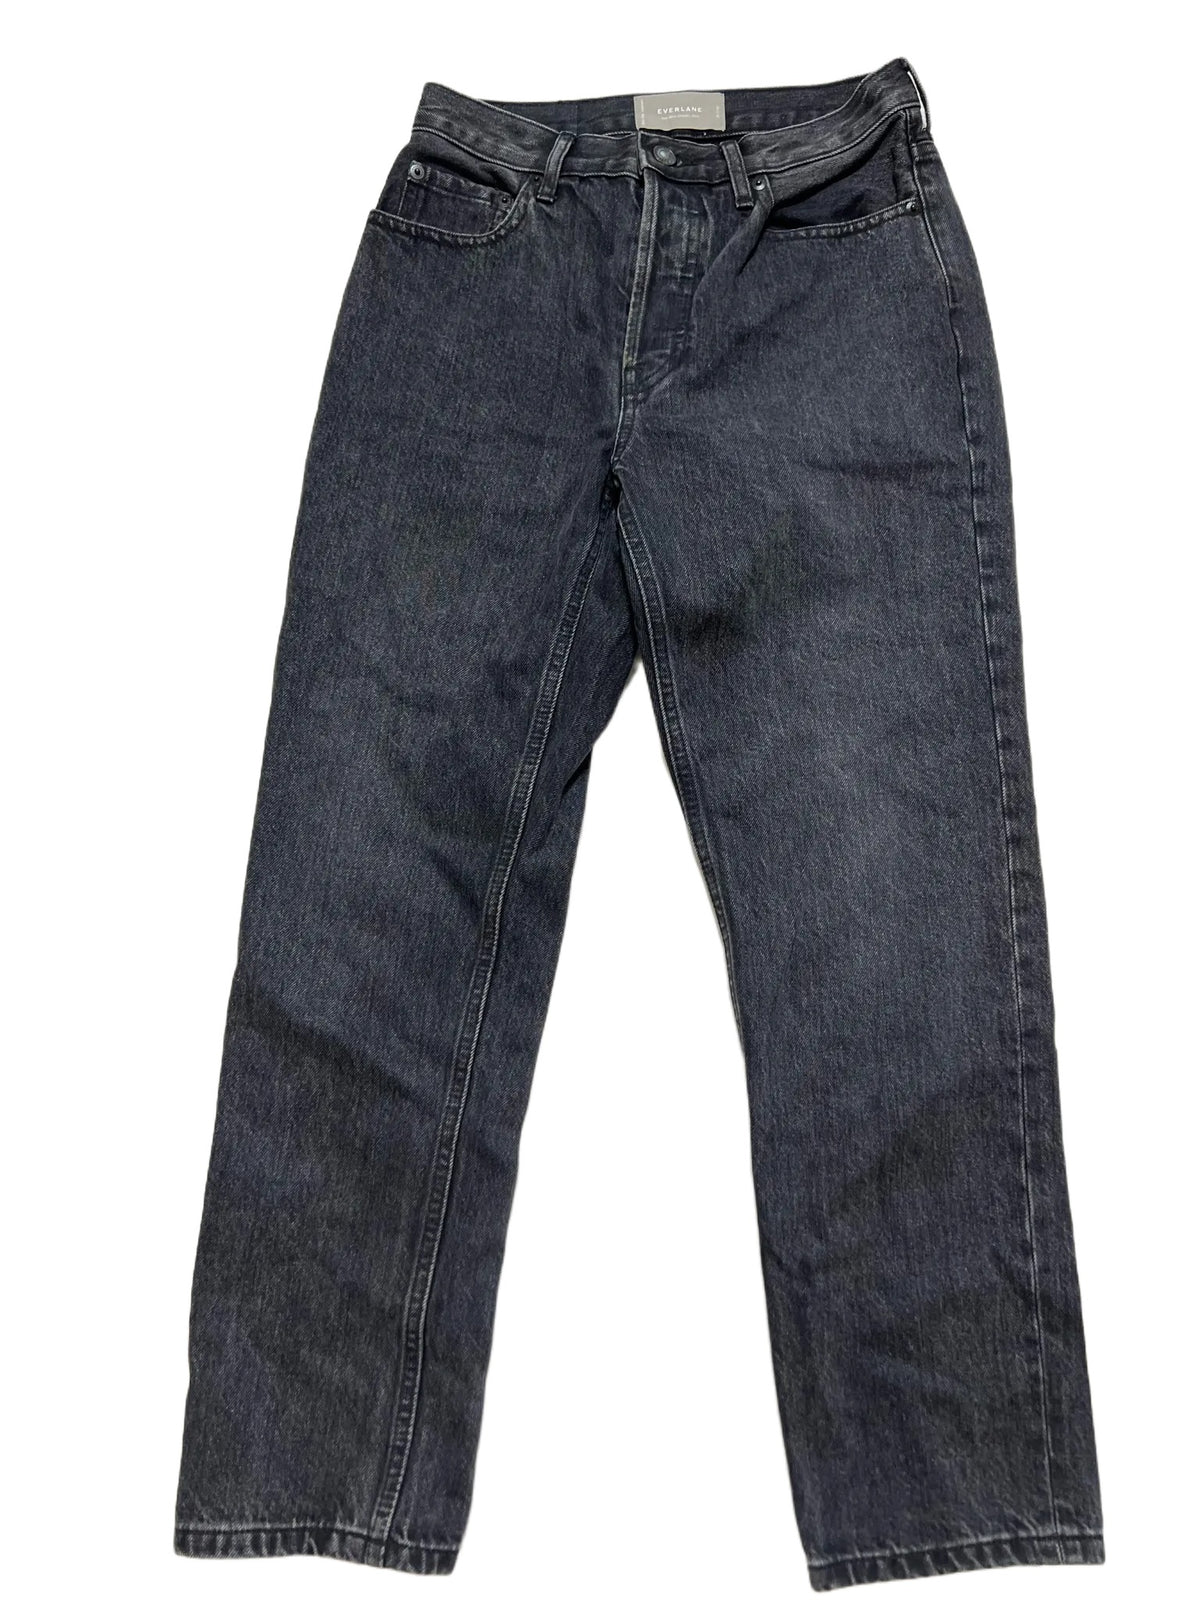 Everalane- Black "90's Cheeky" Jeans